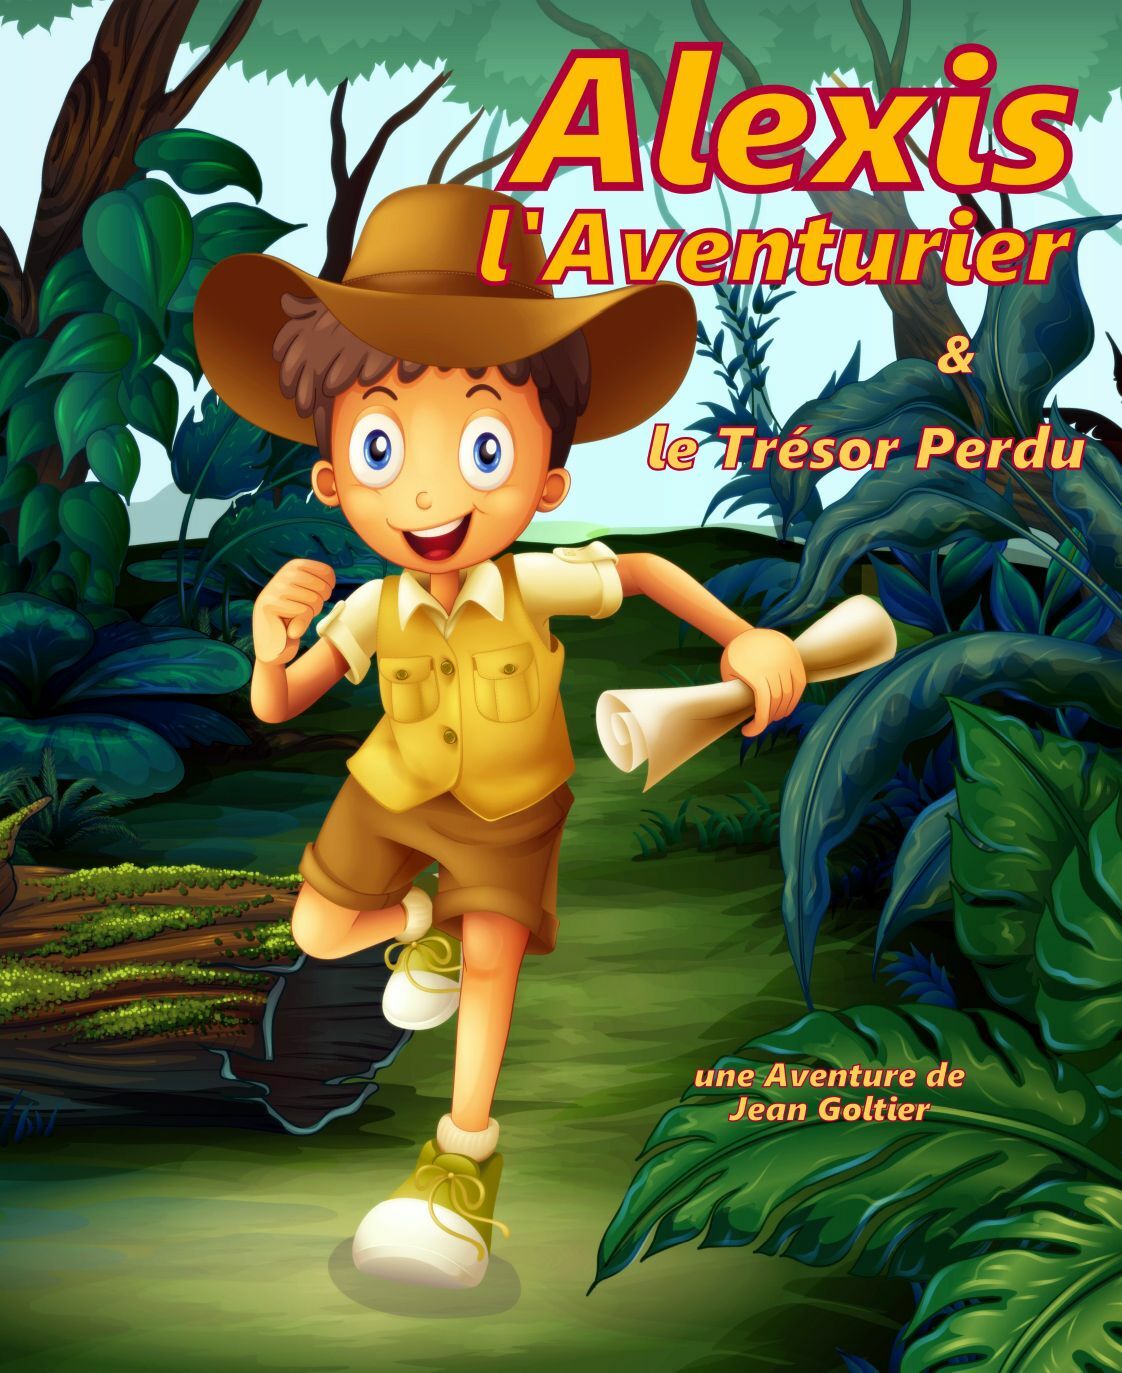 Alexis, the adventurer - Kids Theater